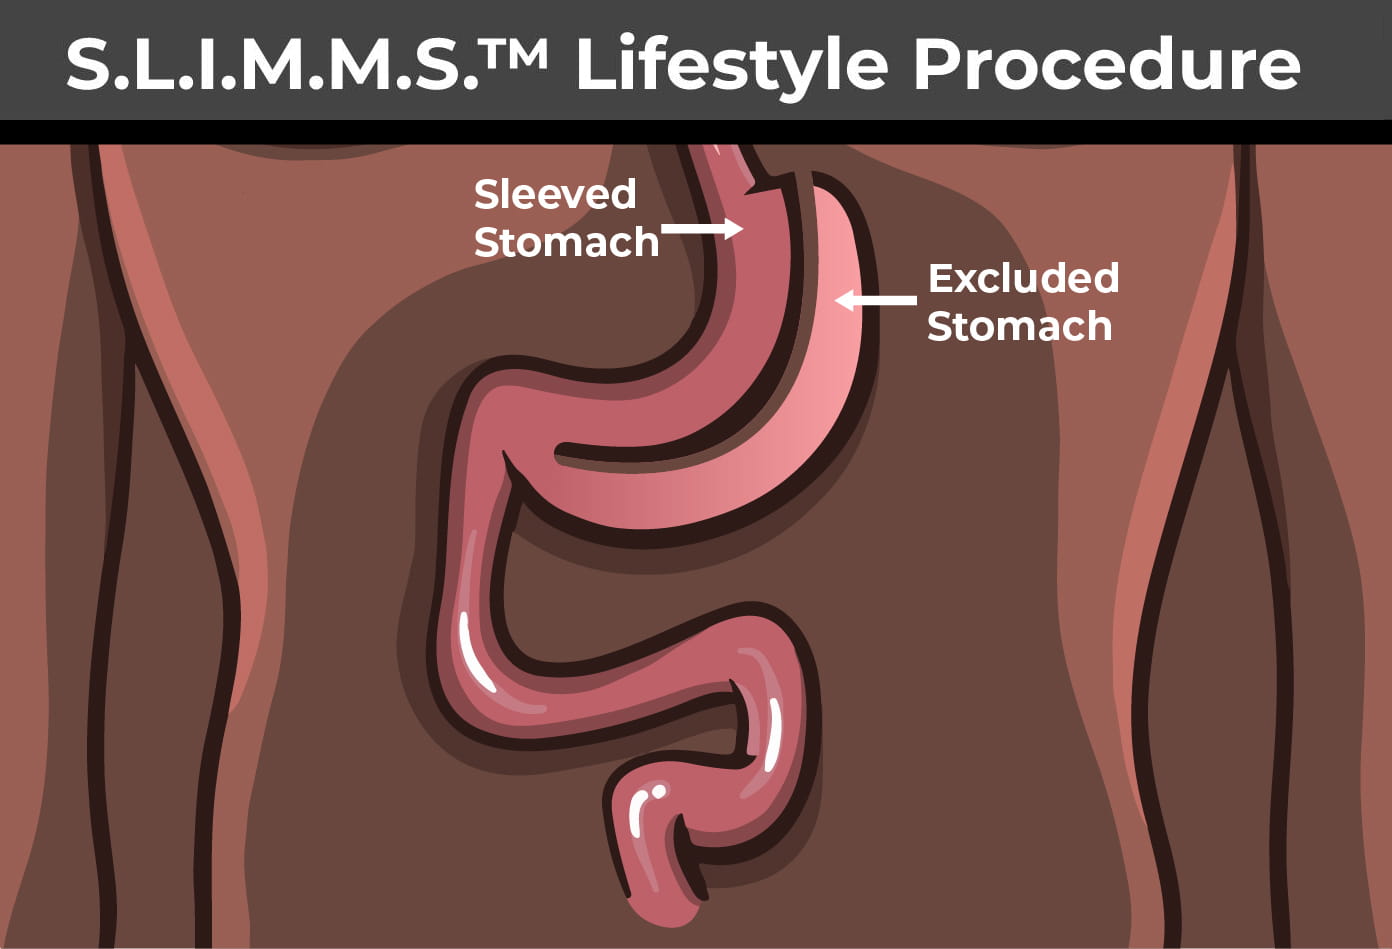 S.L.I.M.M.S.™-Lifestyle Procedure